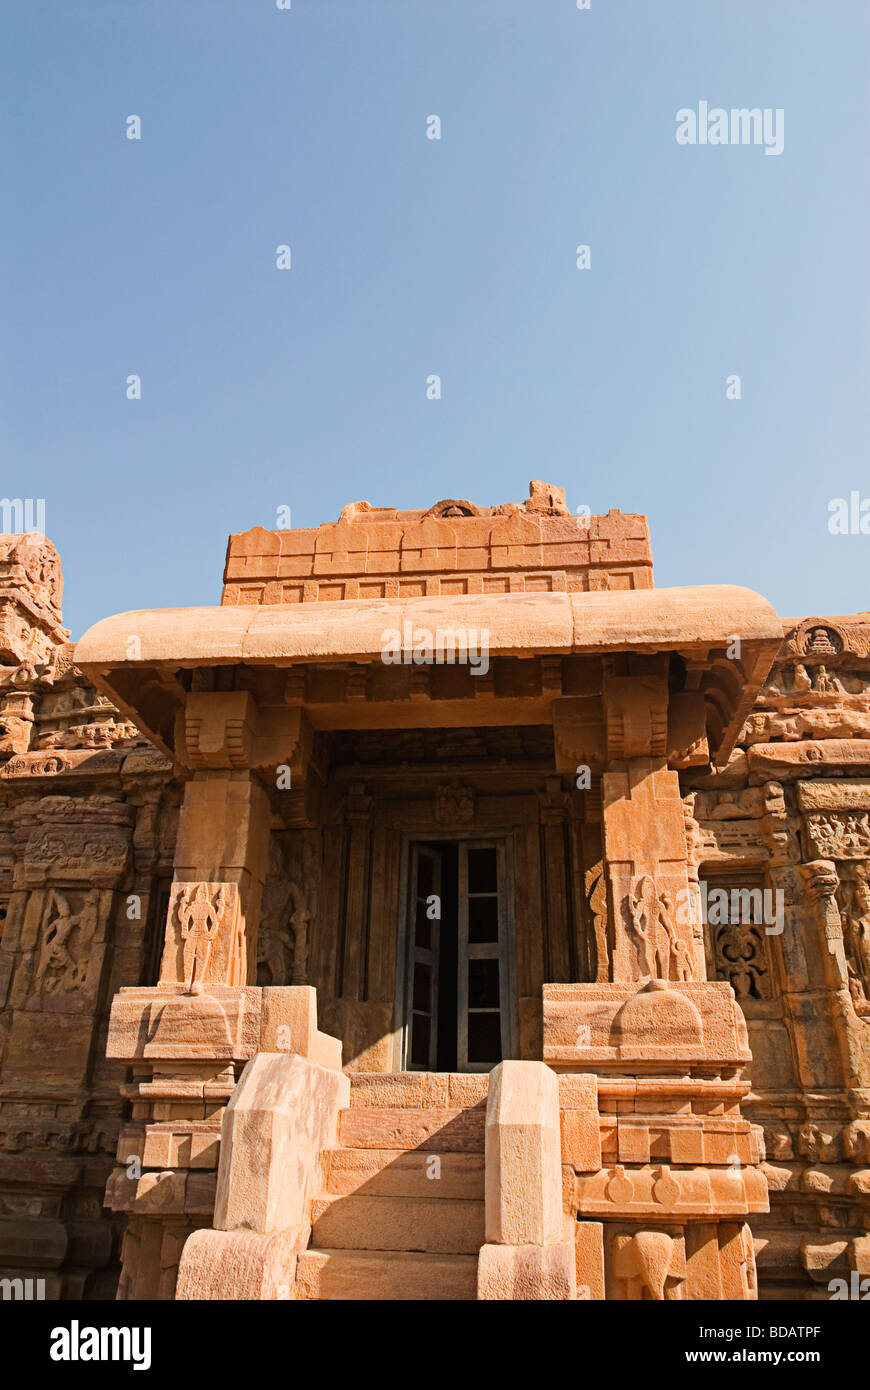 Façade d'un temple, Pattadakal, Bagalkot, Karnataka, Inde Banque D'Images